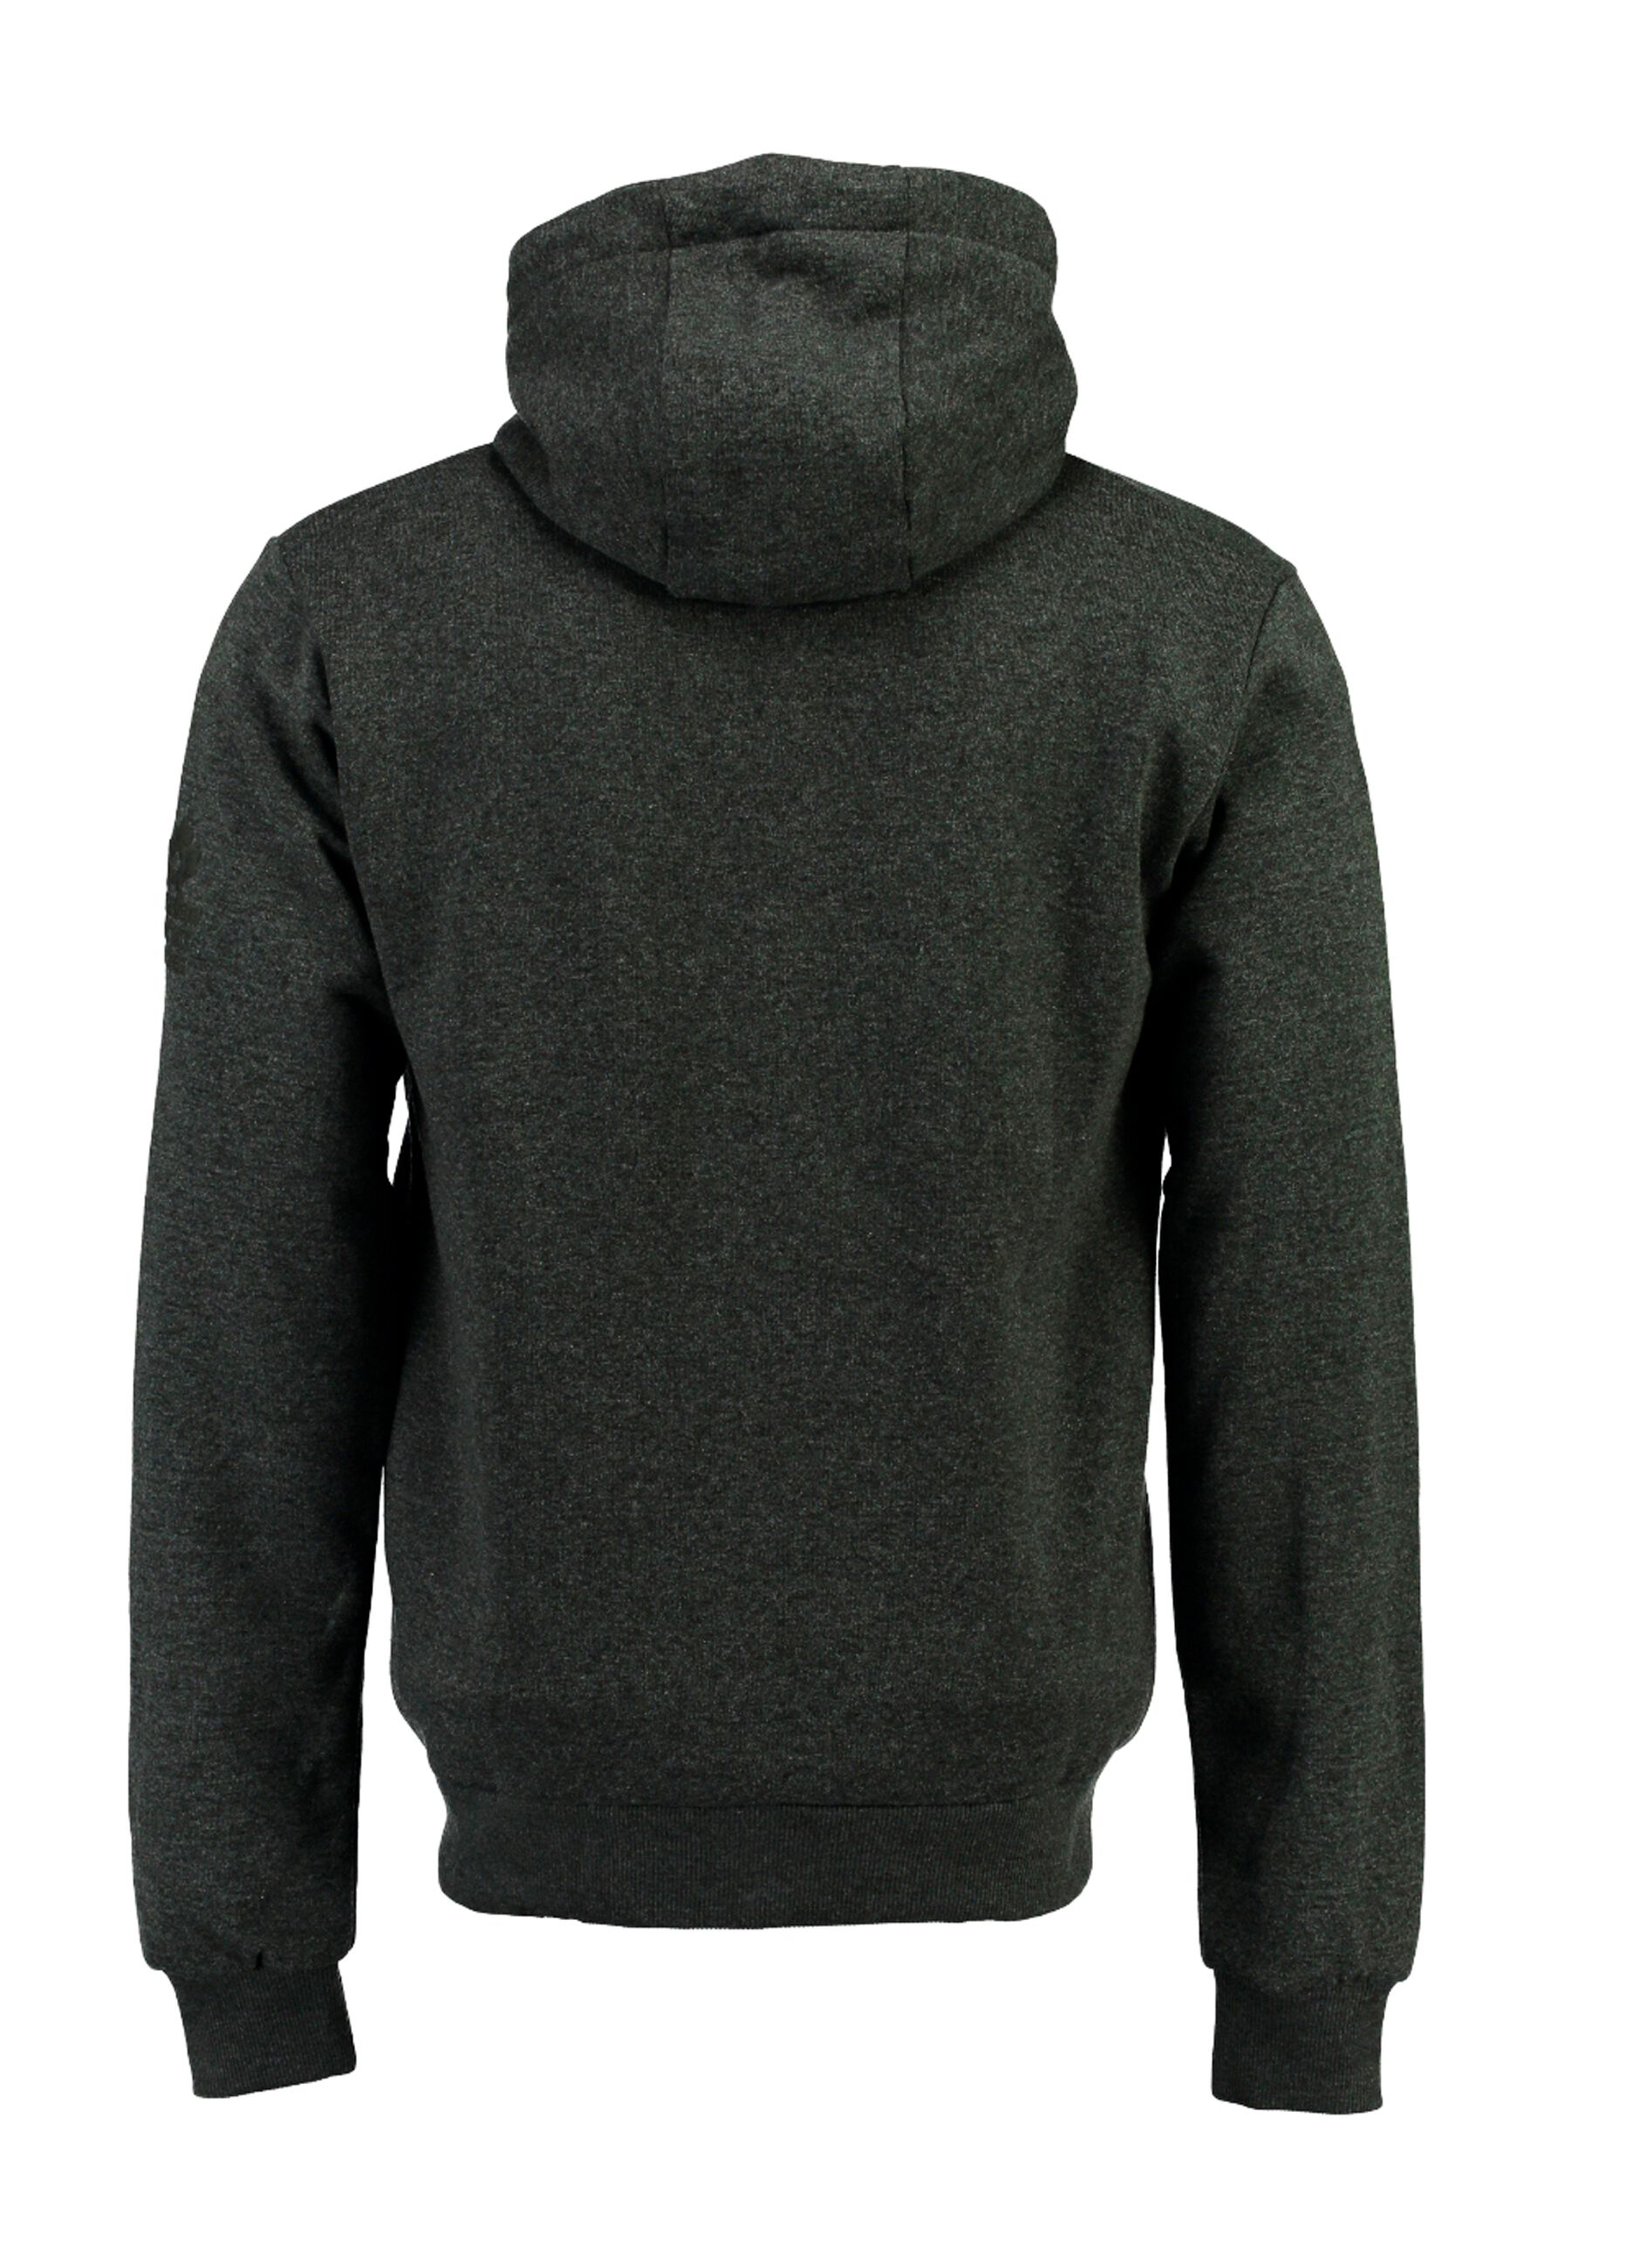 Canadian Peak full-zip sweatshirt with hood